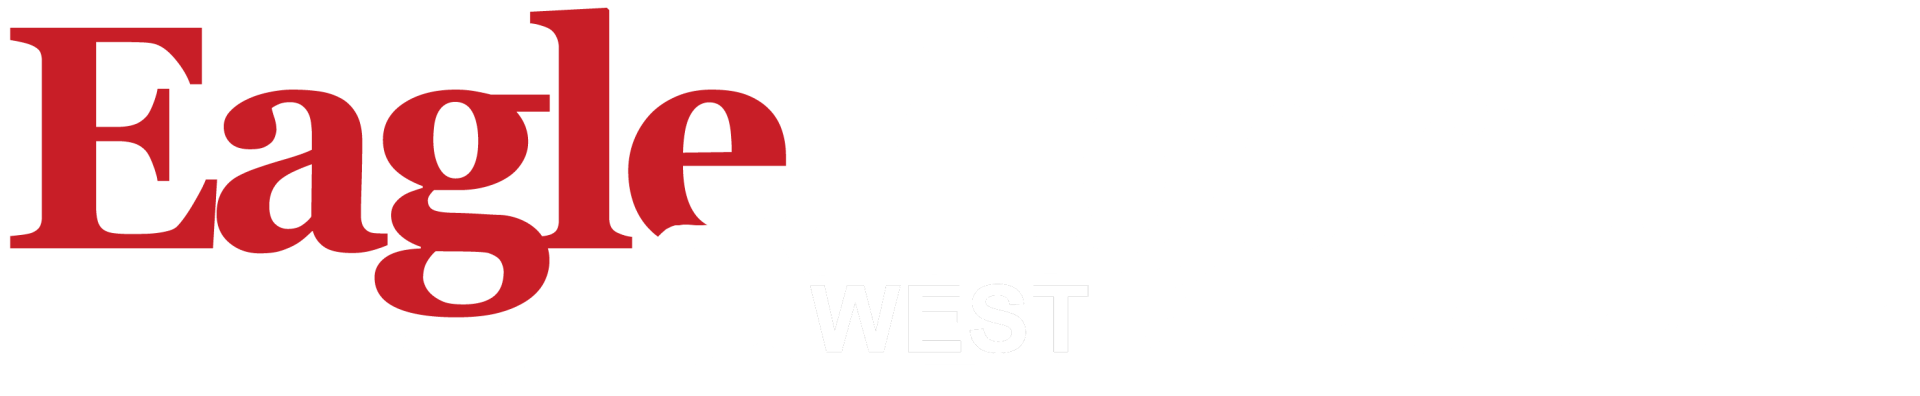 eagle flooring west | flooring services in phoenix